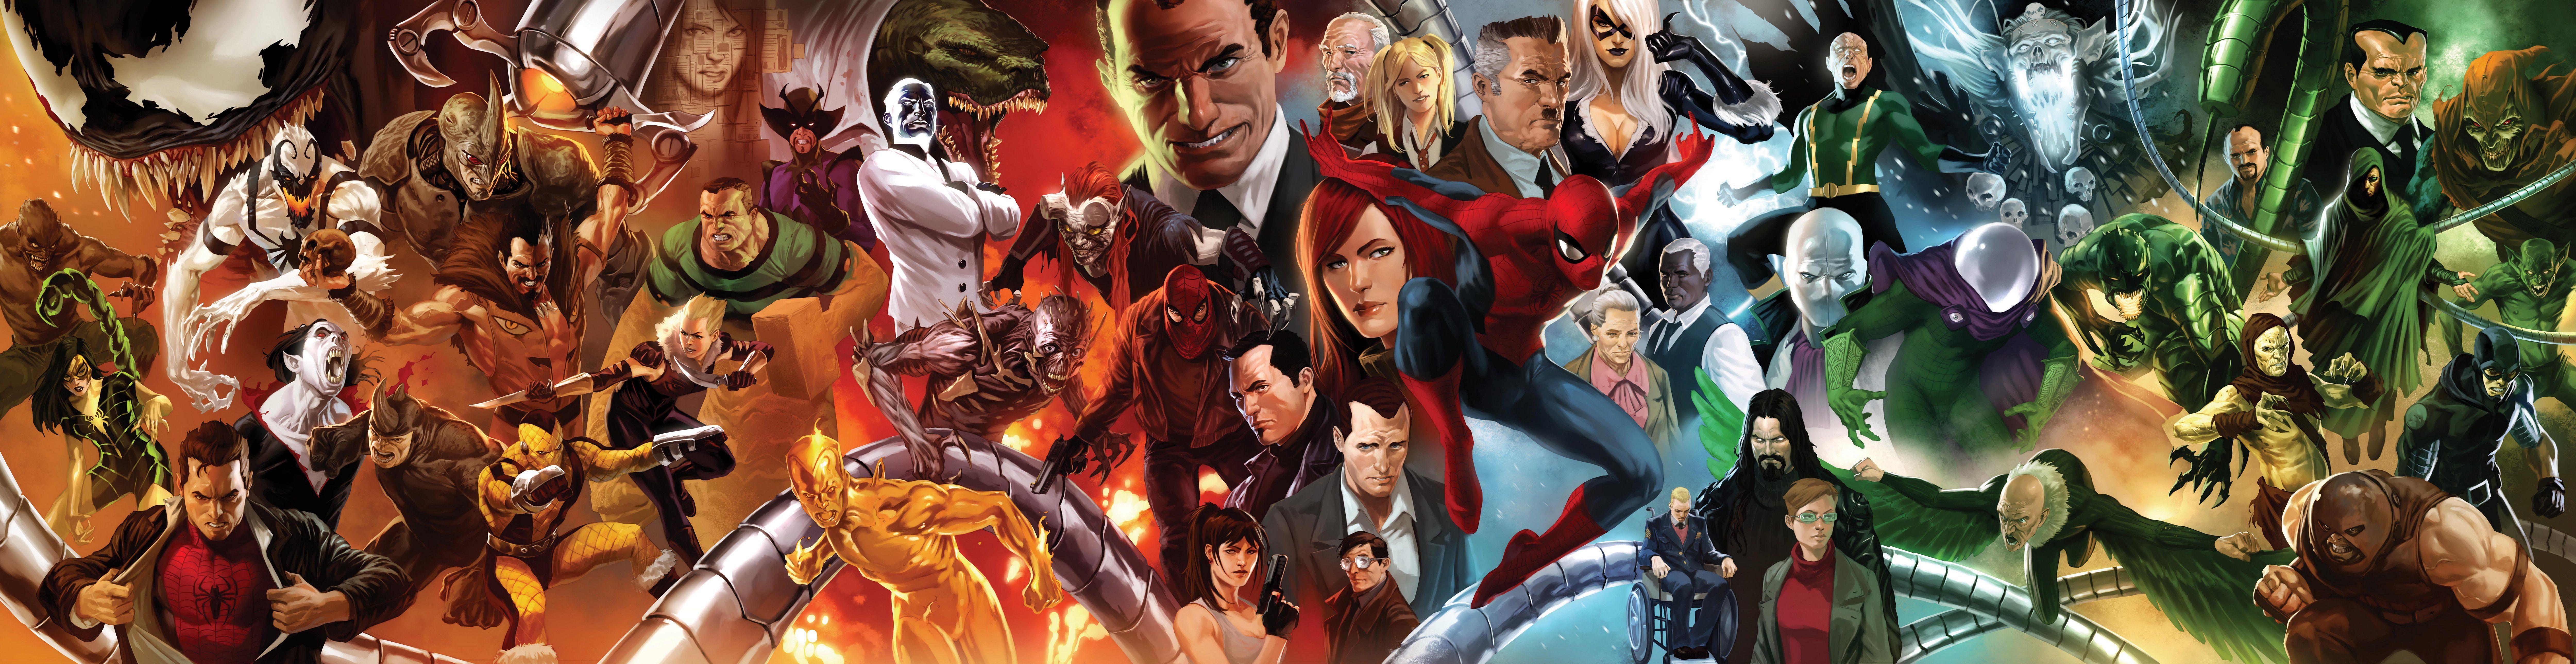 Comics, Venom, Spider Man, Kraken, Mary Jane Watson, Electro